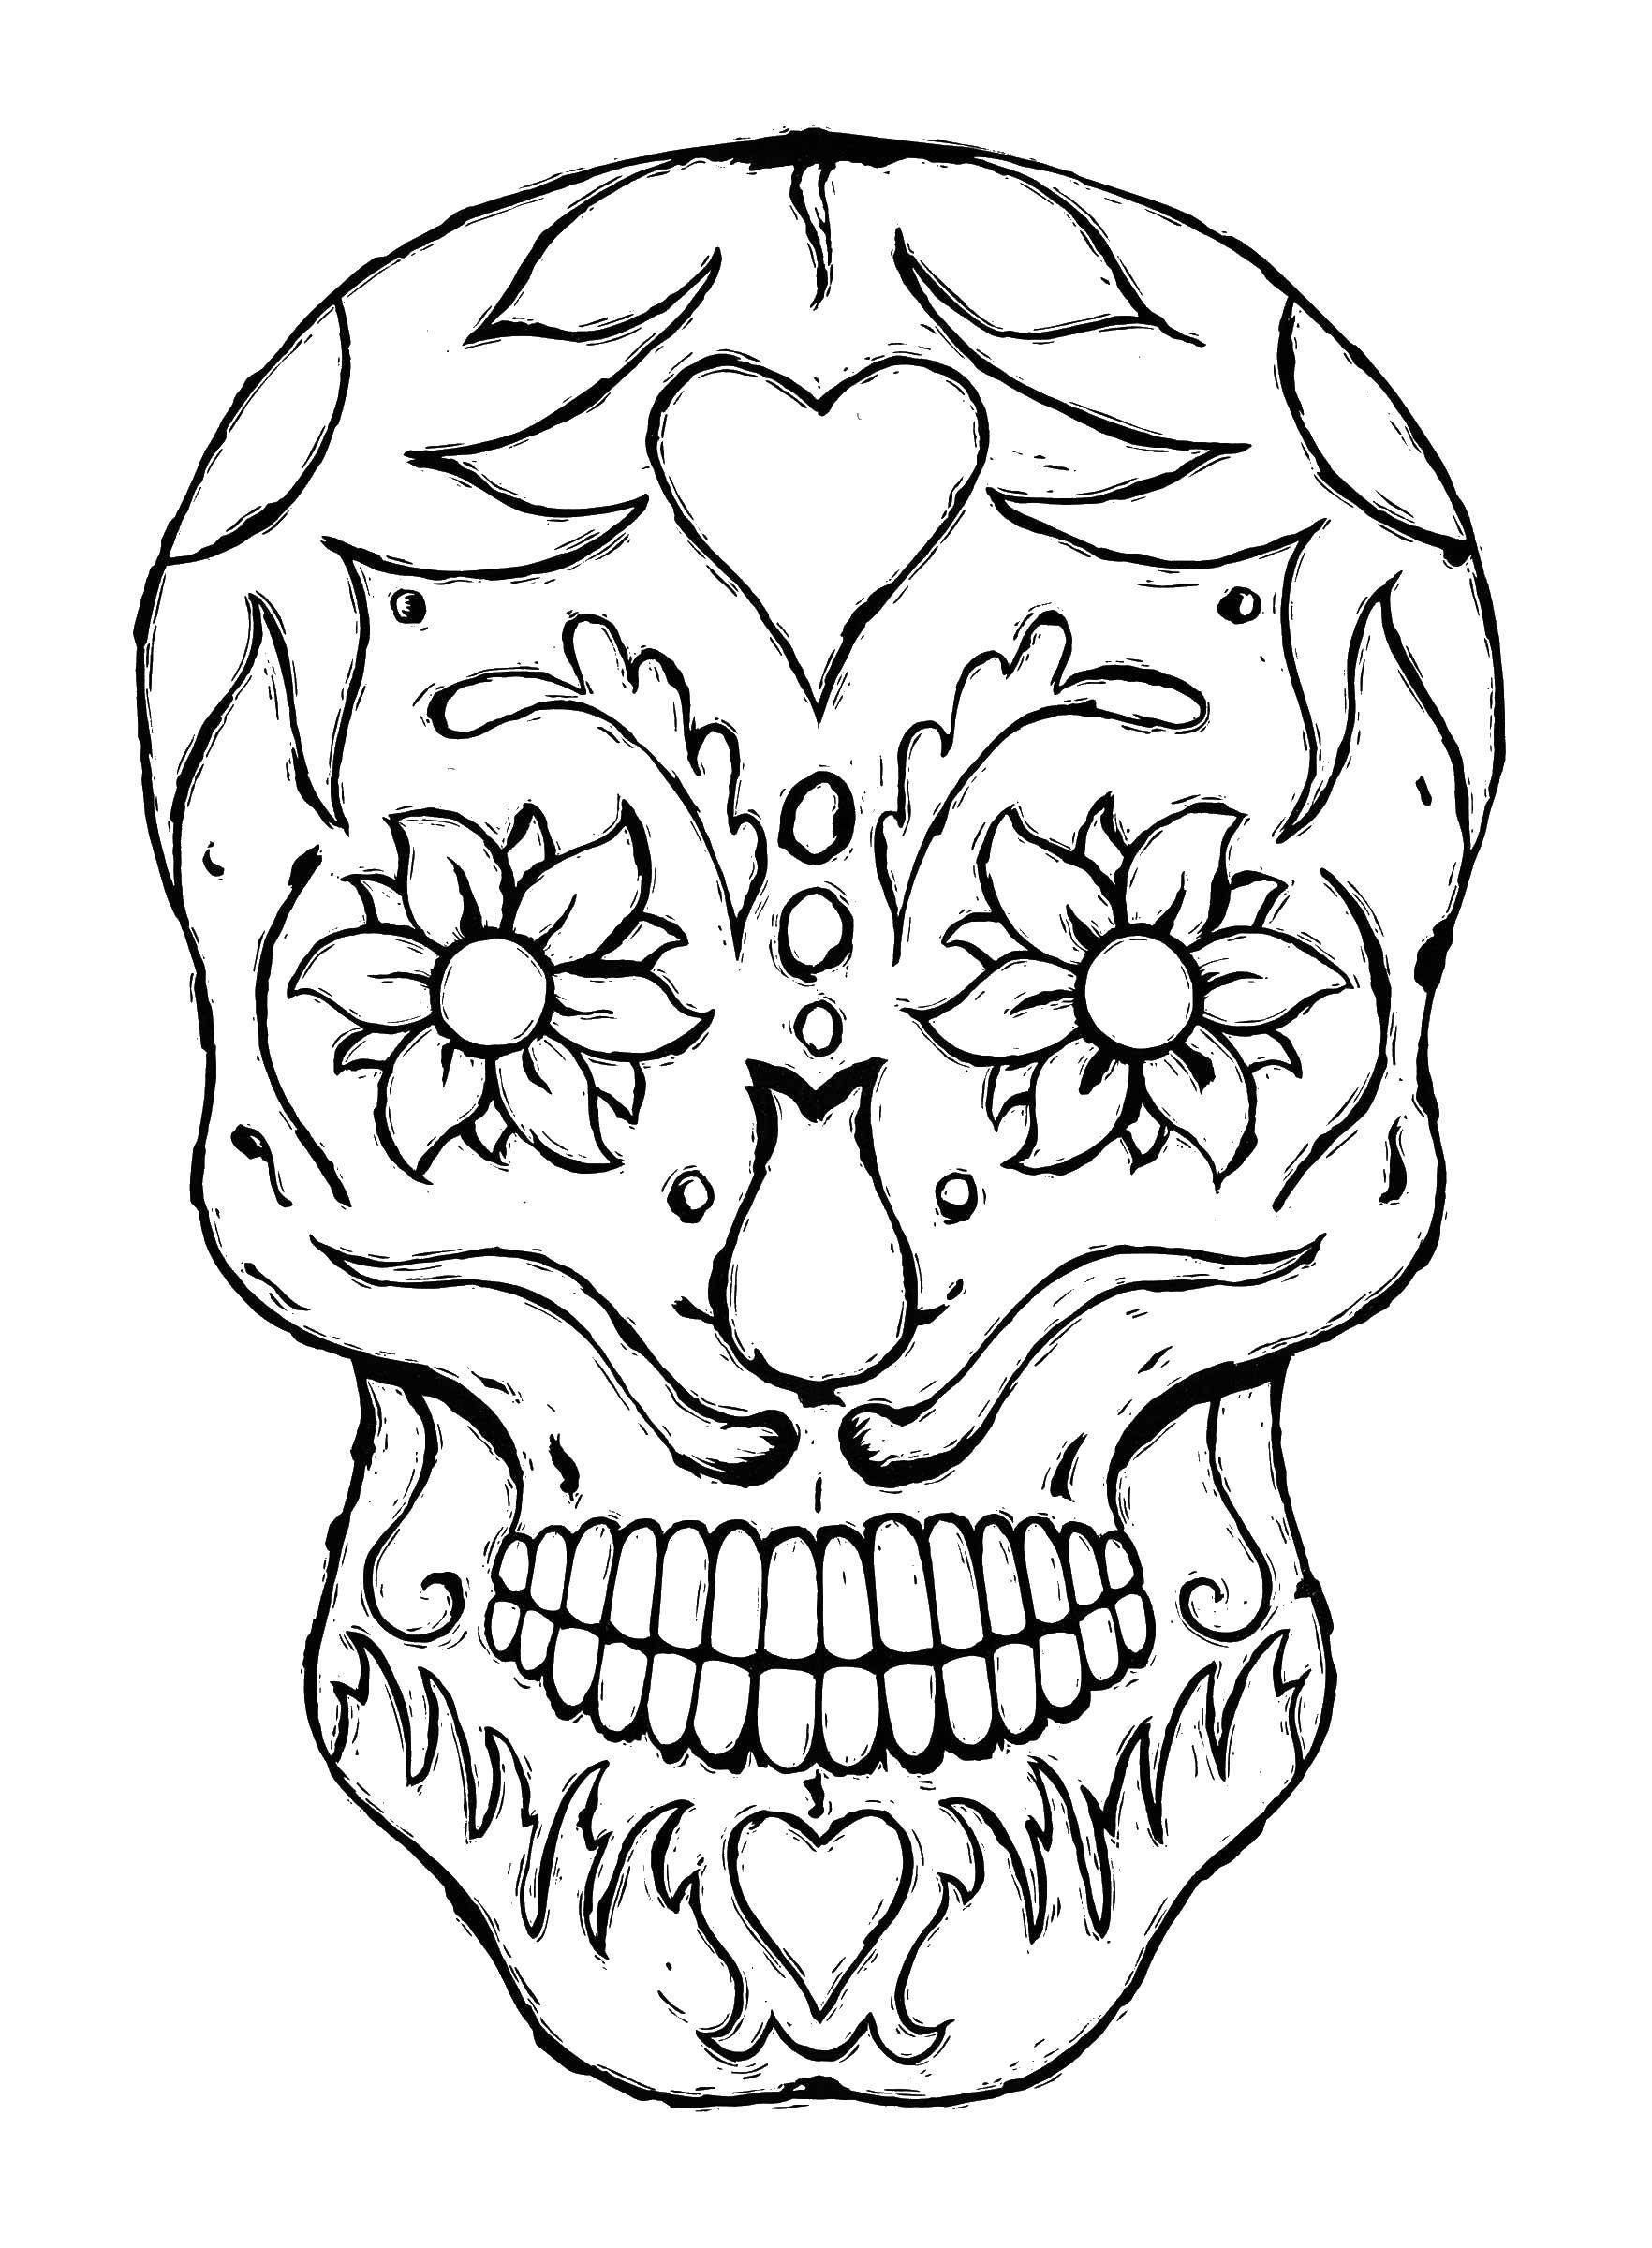 Coloring Patterned crock. Category skull. Tags:  Skull, pattern.